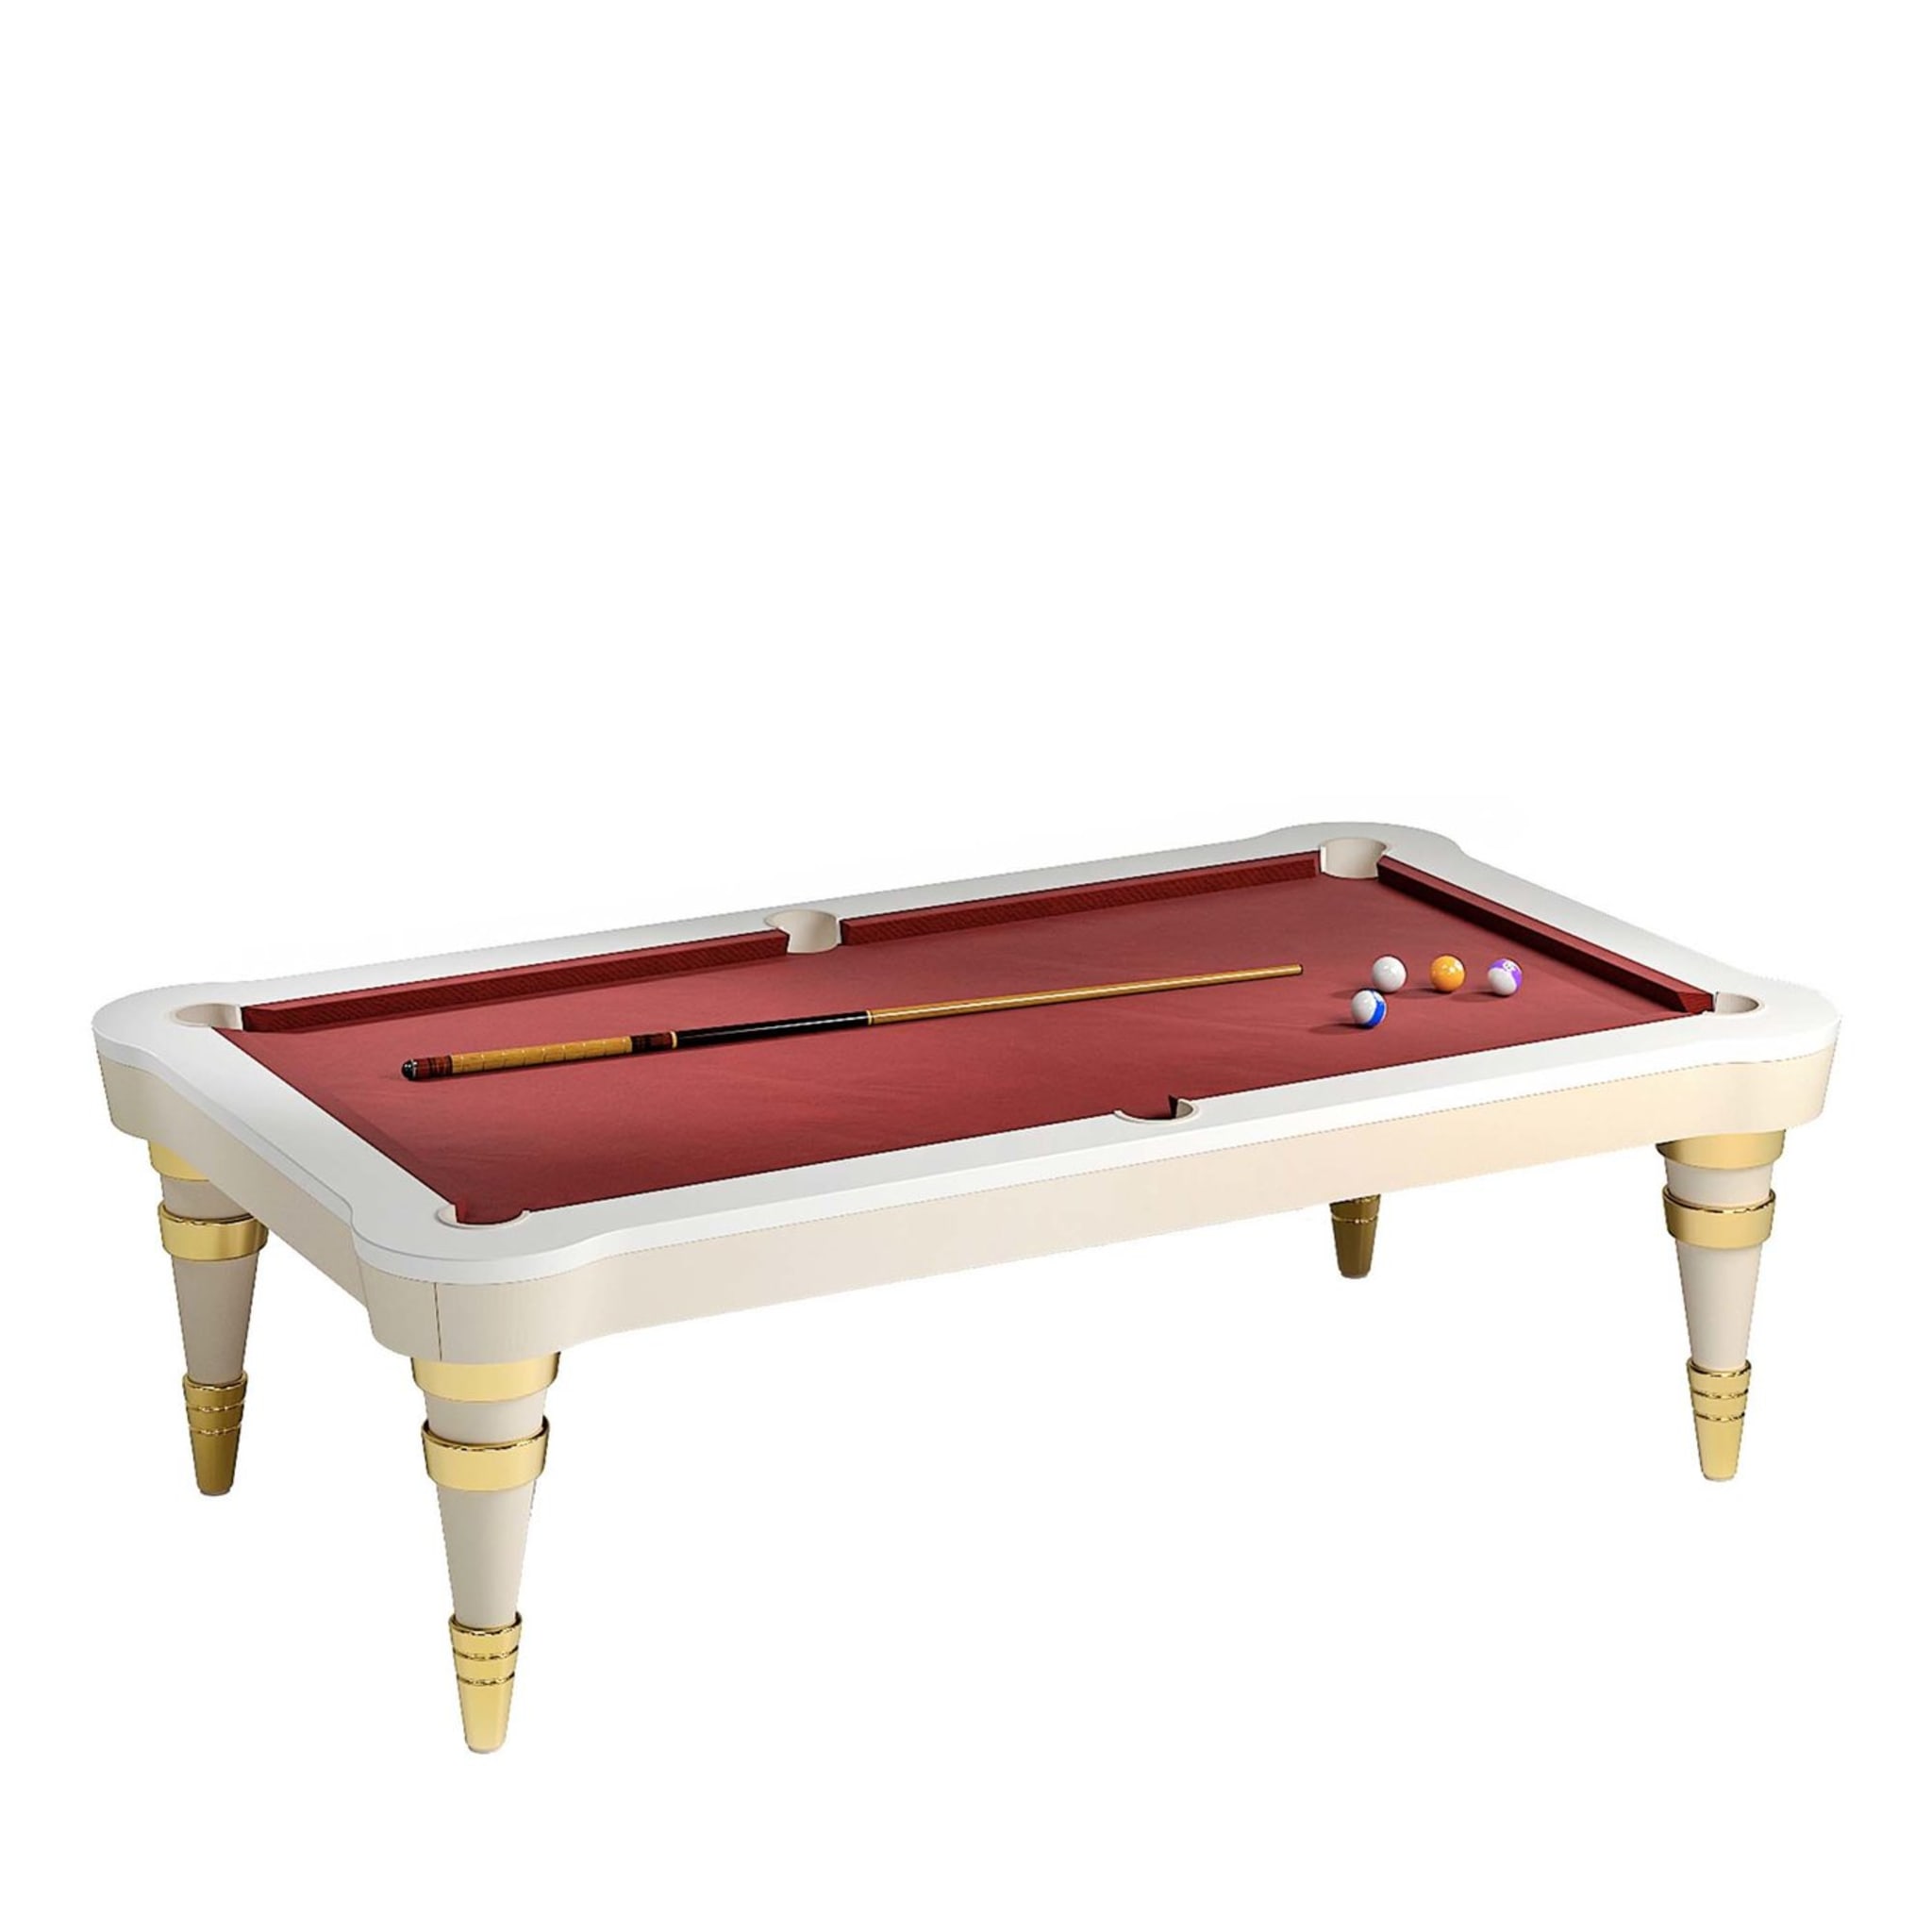 Regis burgundy pool table by Pino Vismara - Main view